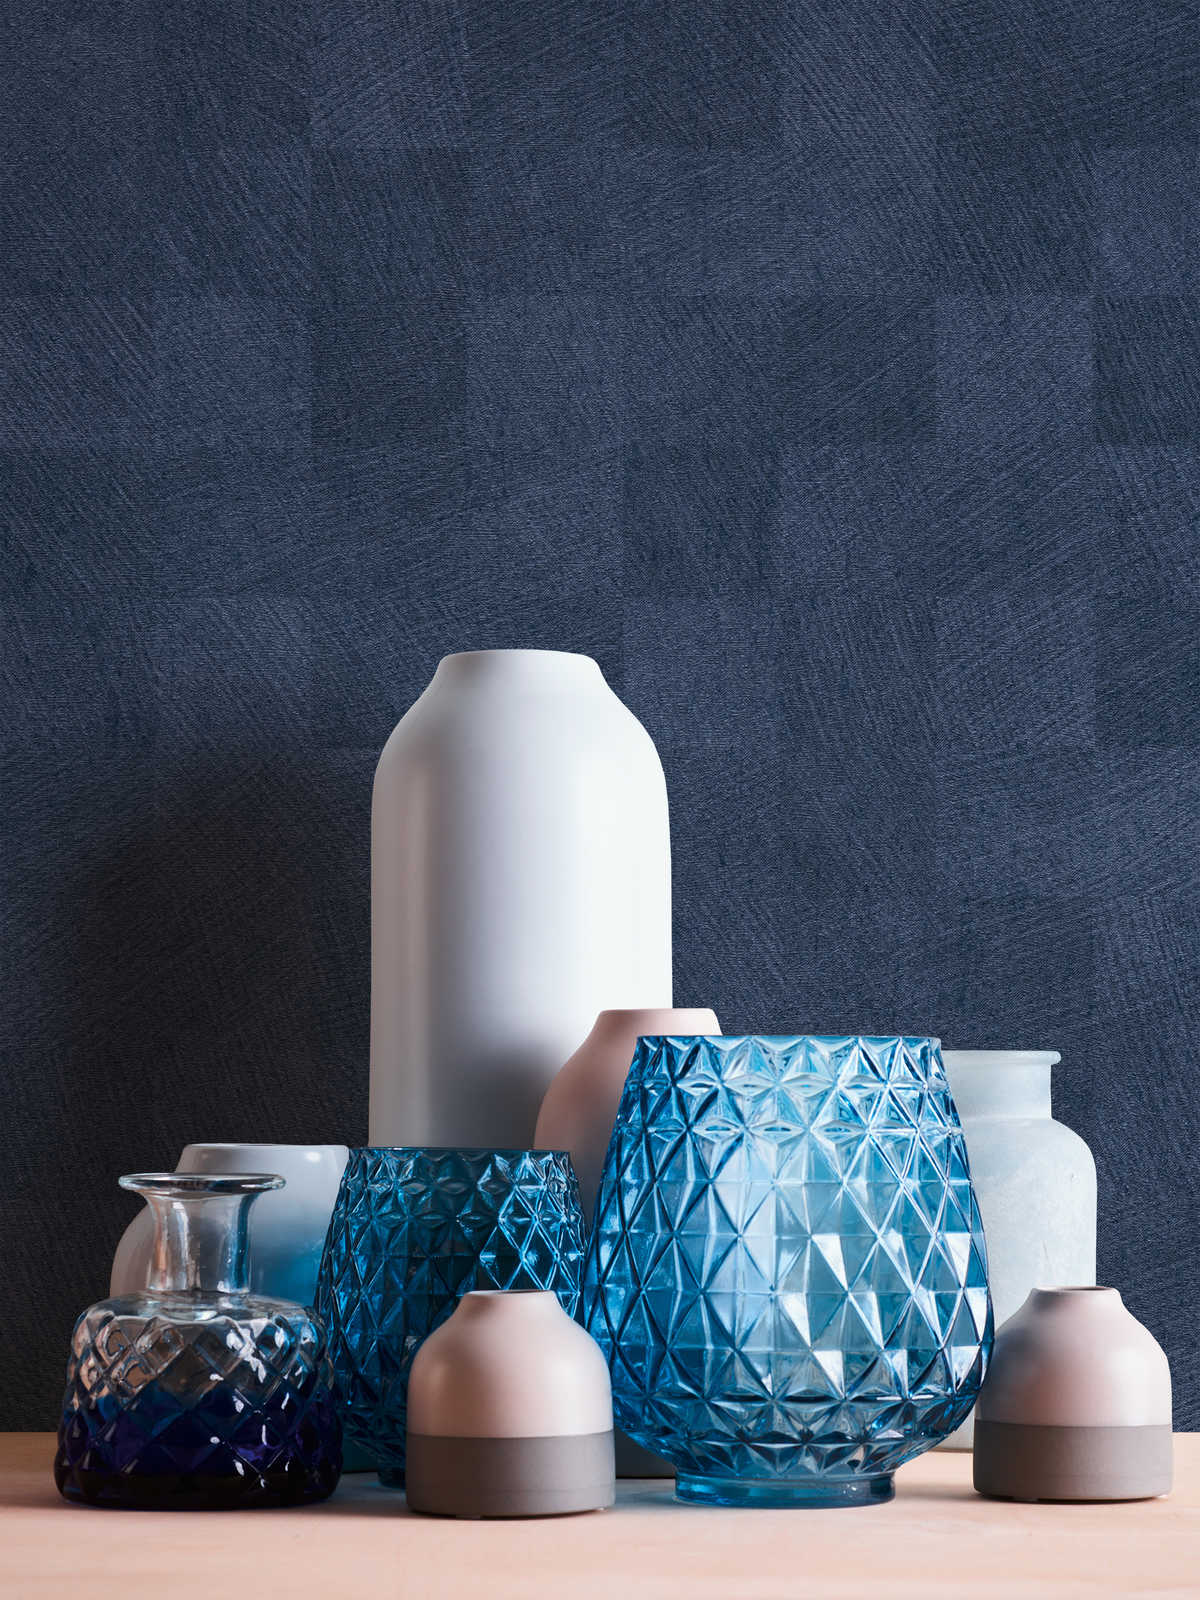             Geruit behang nachtblauw met structuur & glanseffect - blauw
        